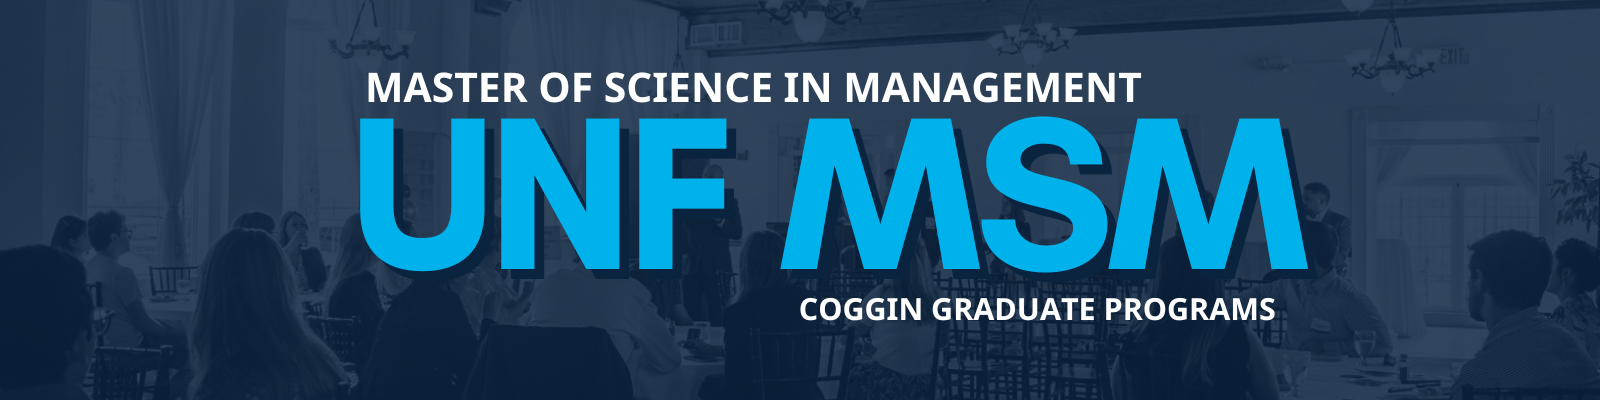 Master of Science in Management, UNF MSM, Coggin Graduate Programs